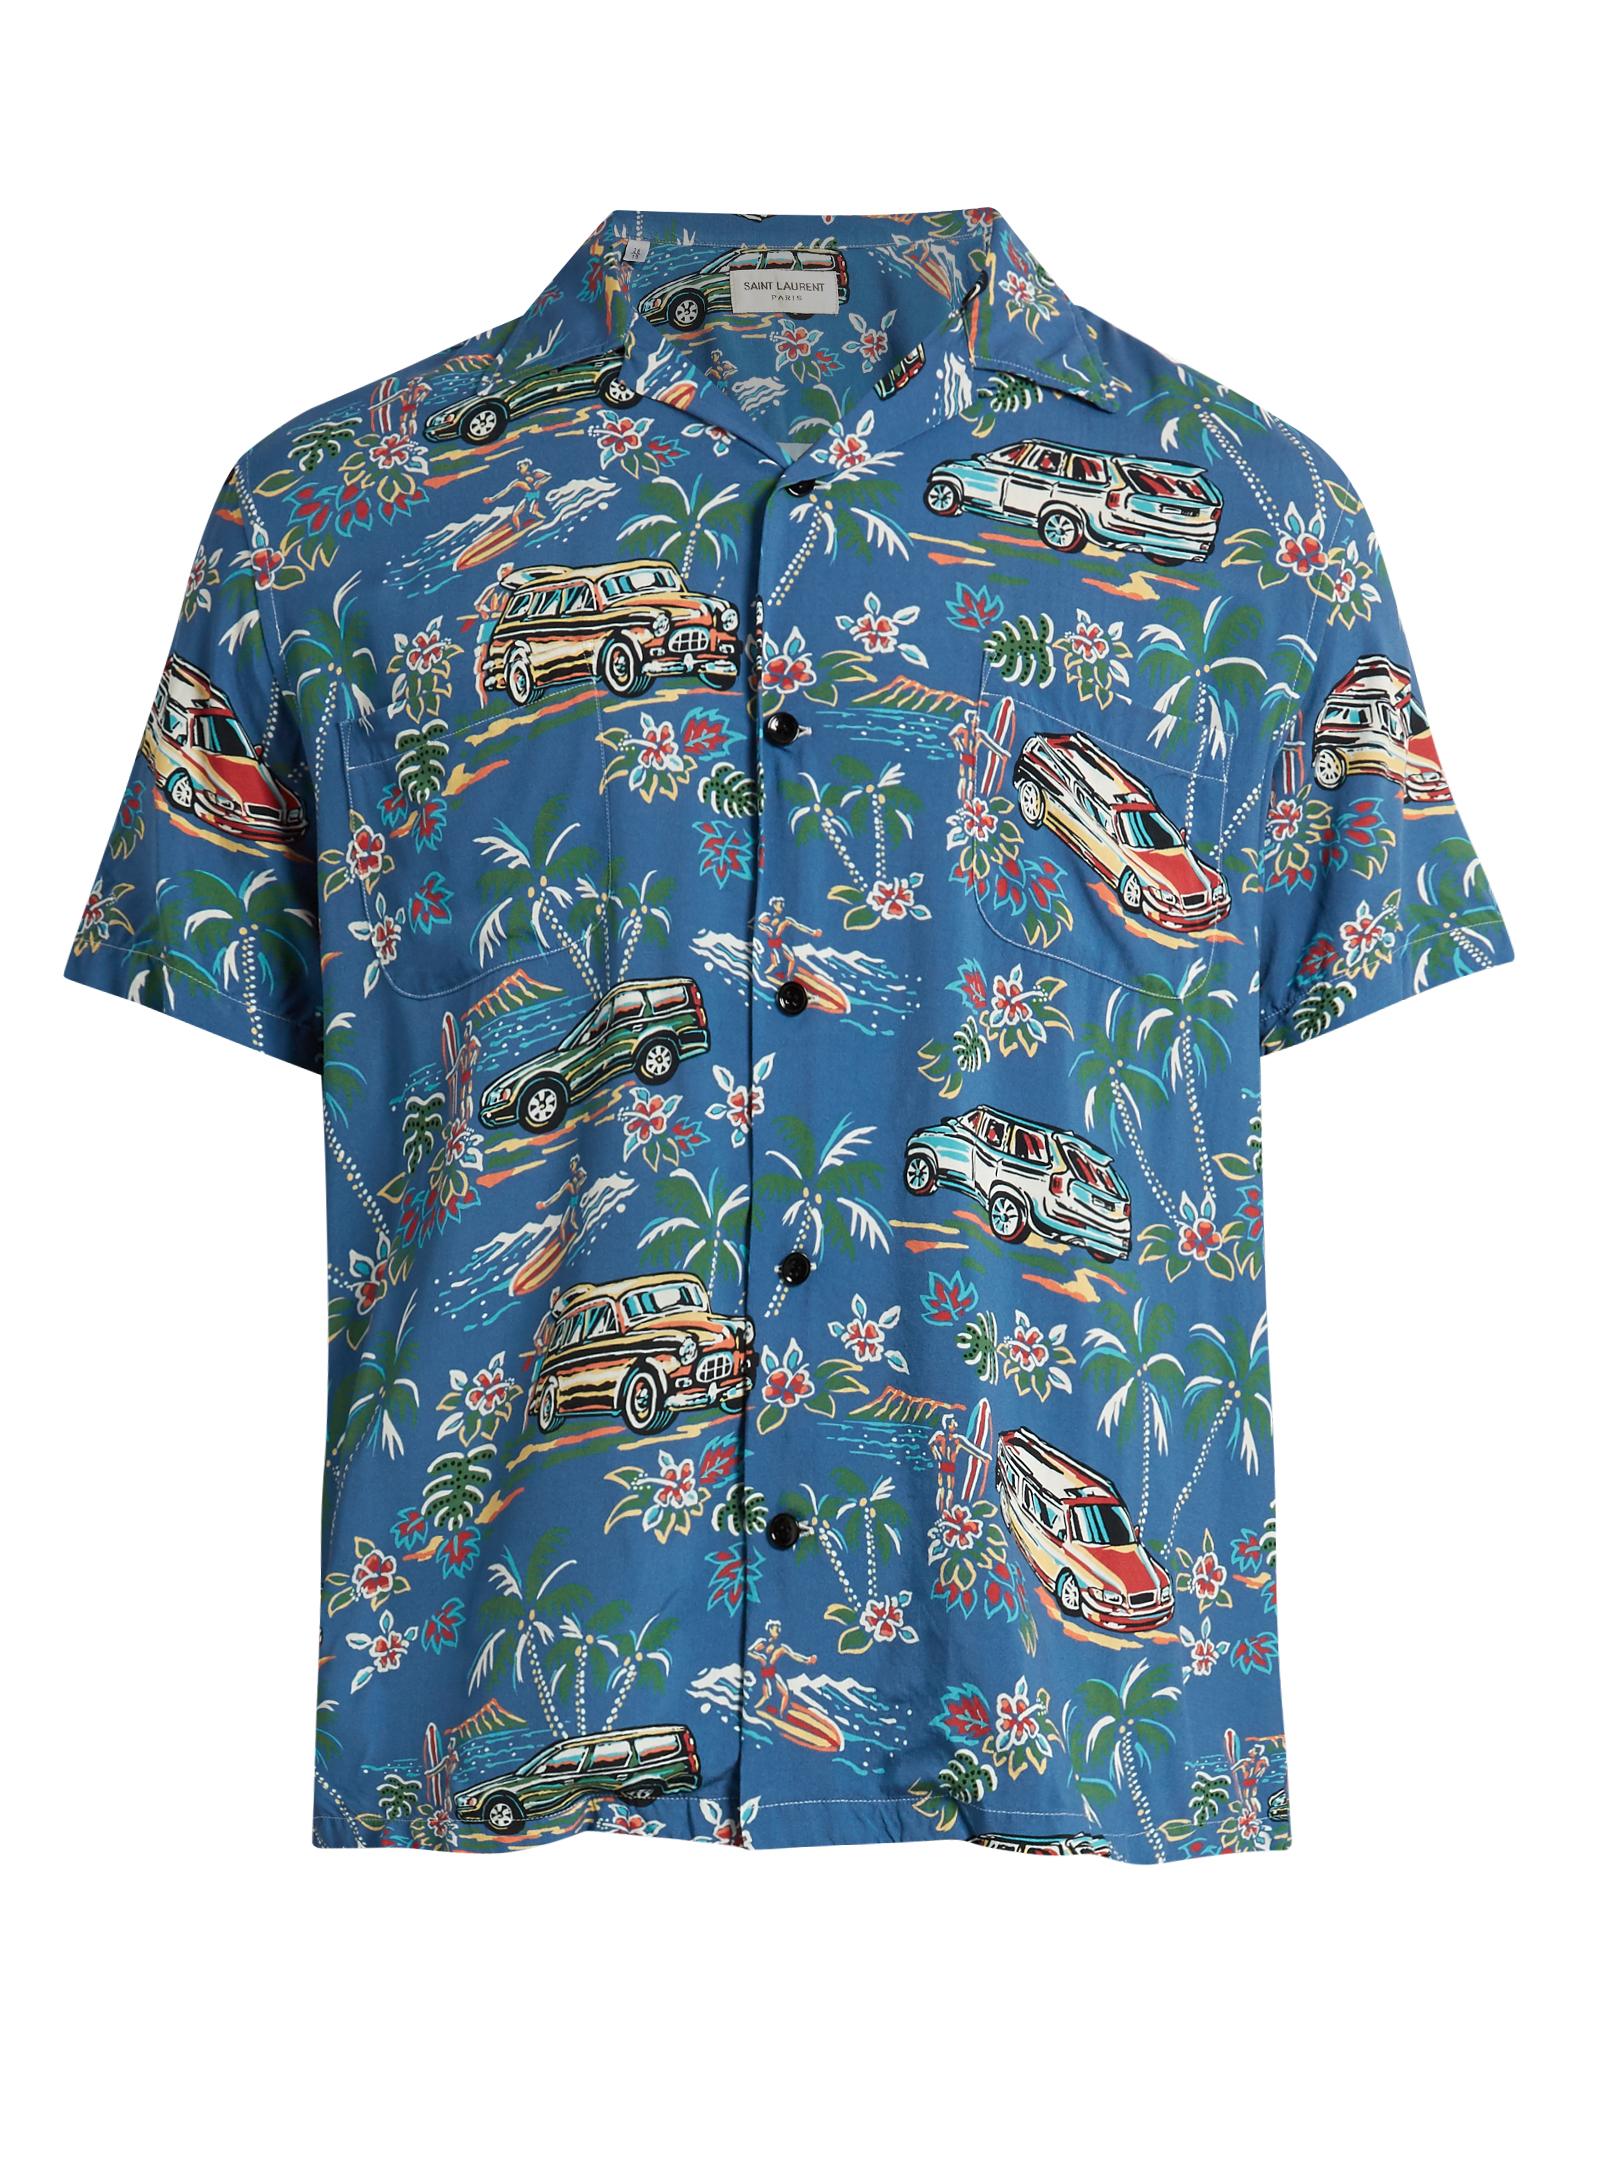 Saint Laurent Classic Hawaiian Shirt in Blue for Men - Lyst